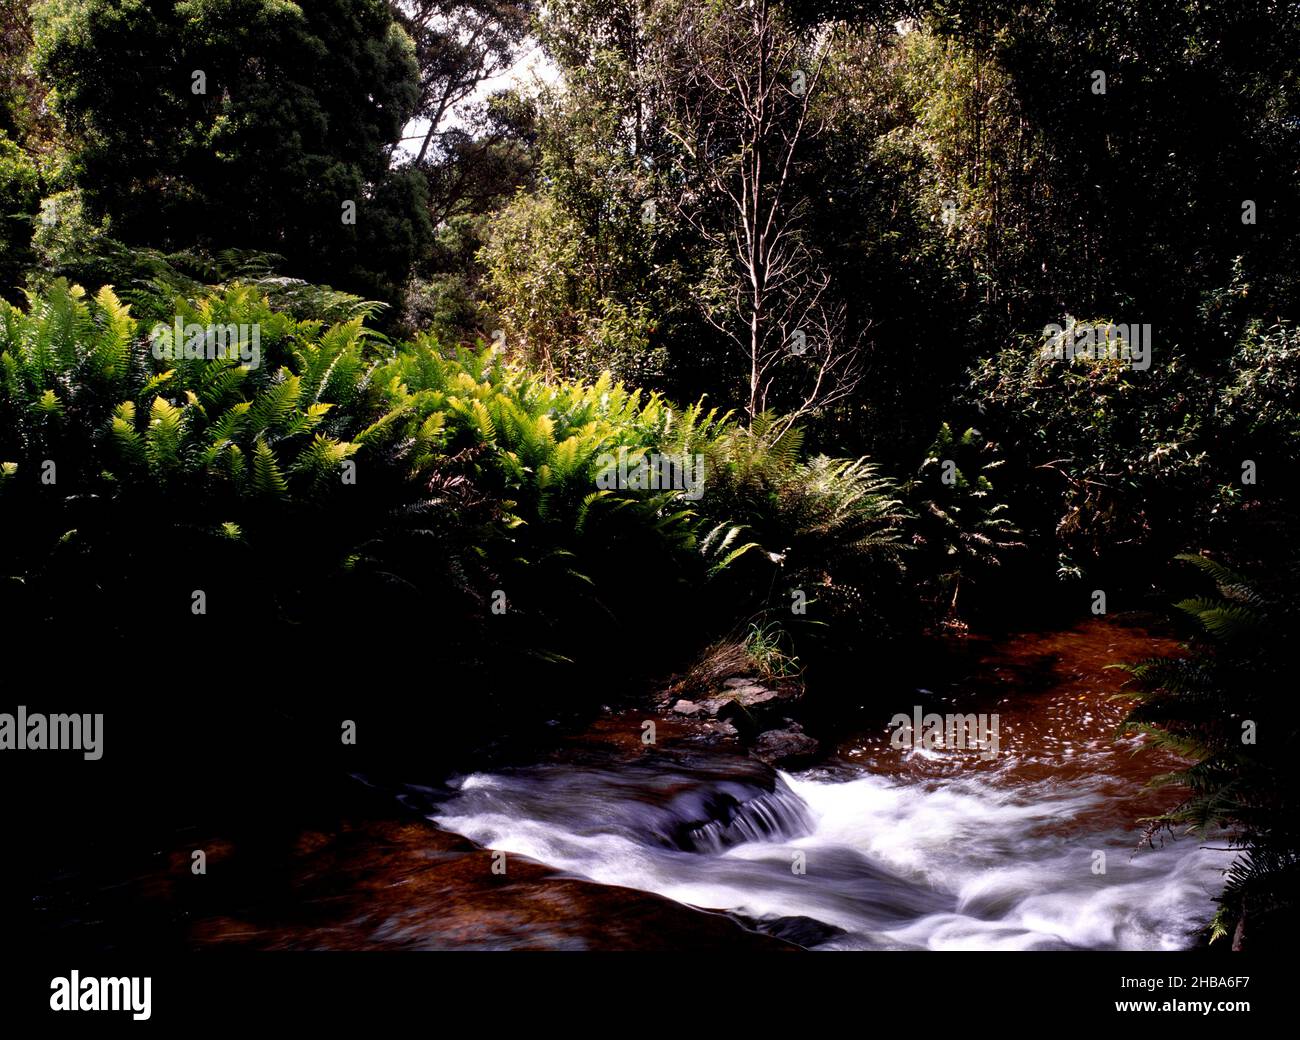 Agua corriente en la selva tropical, Tasmania Foto de stock